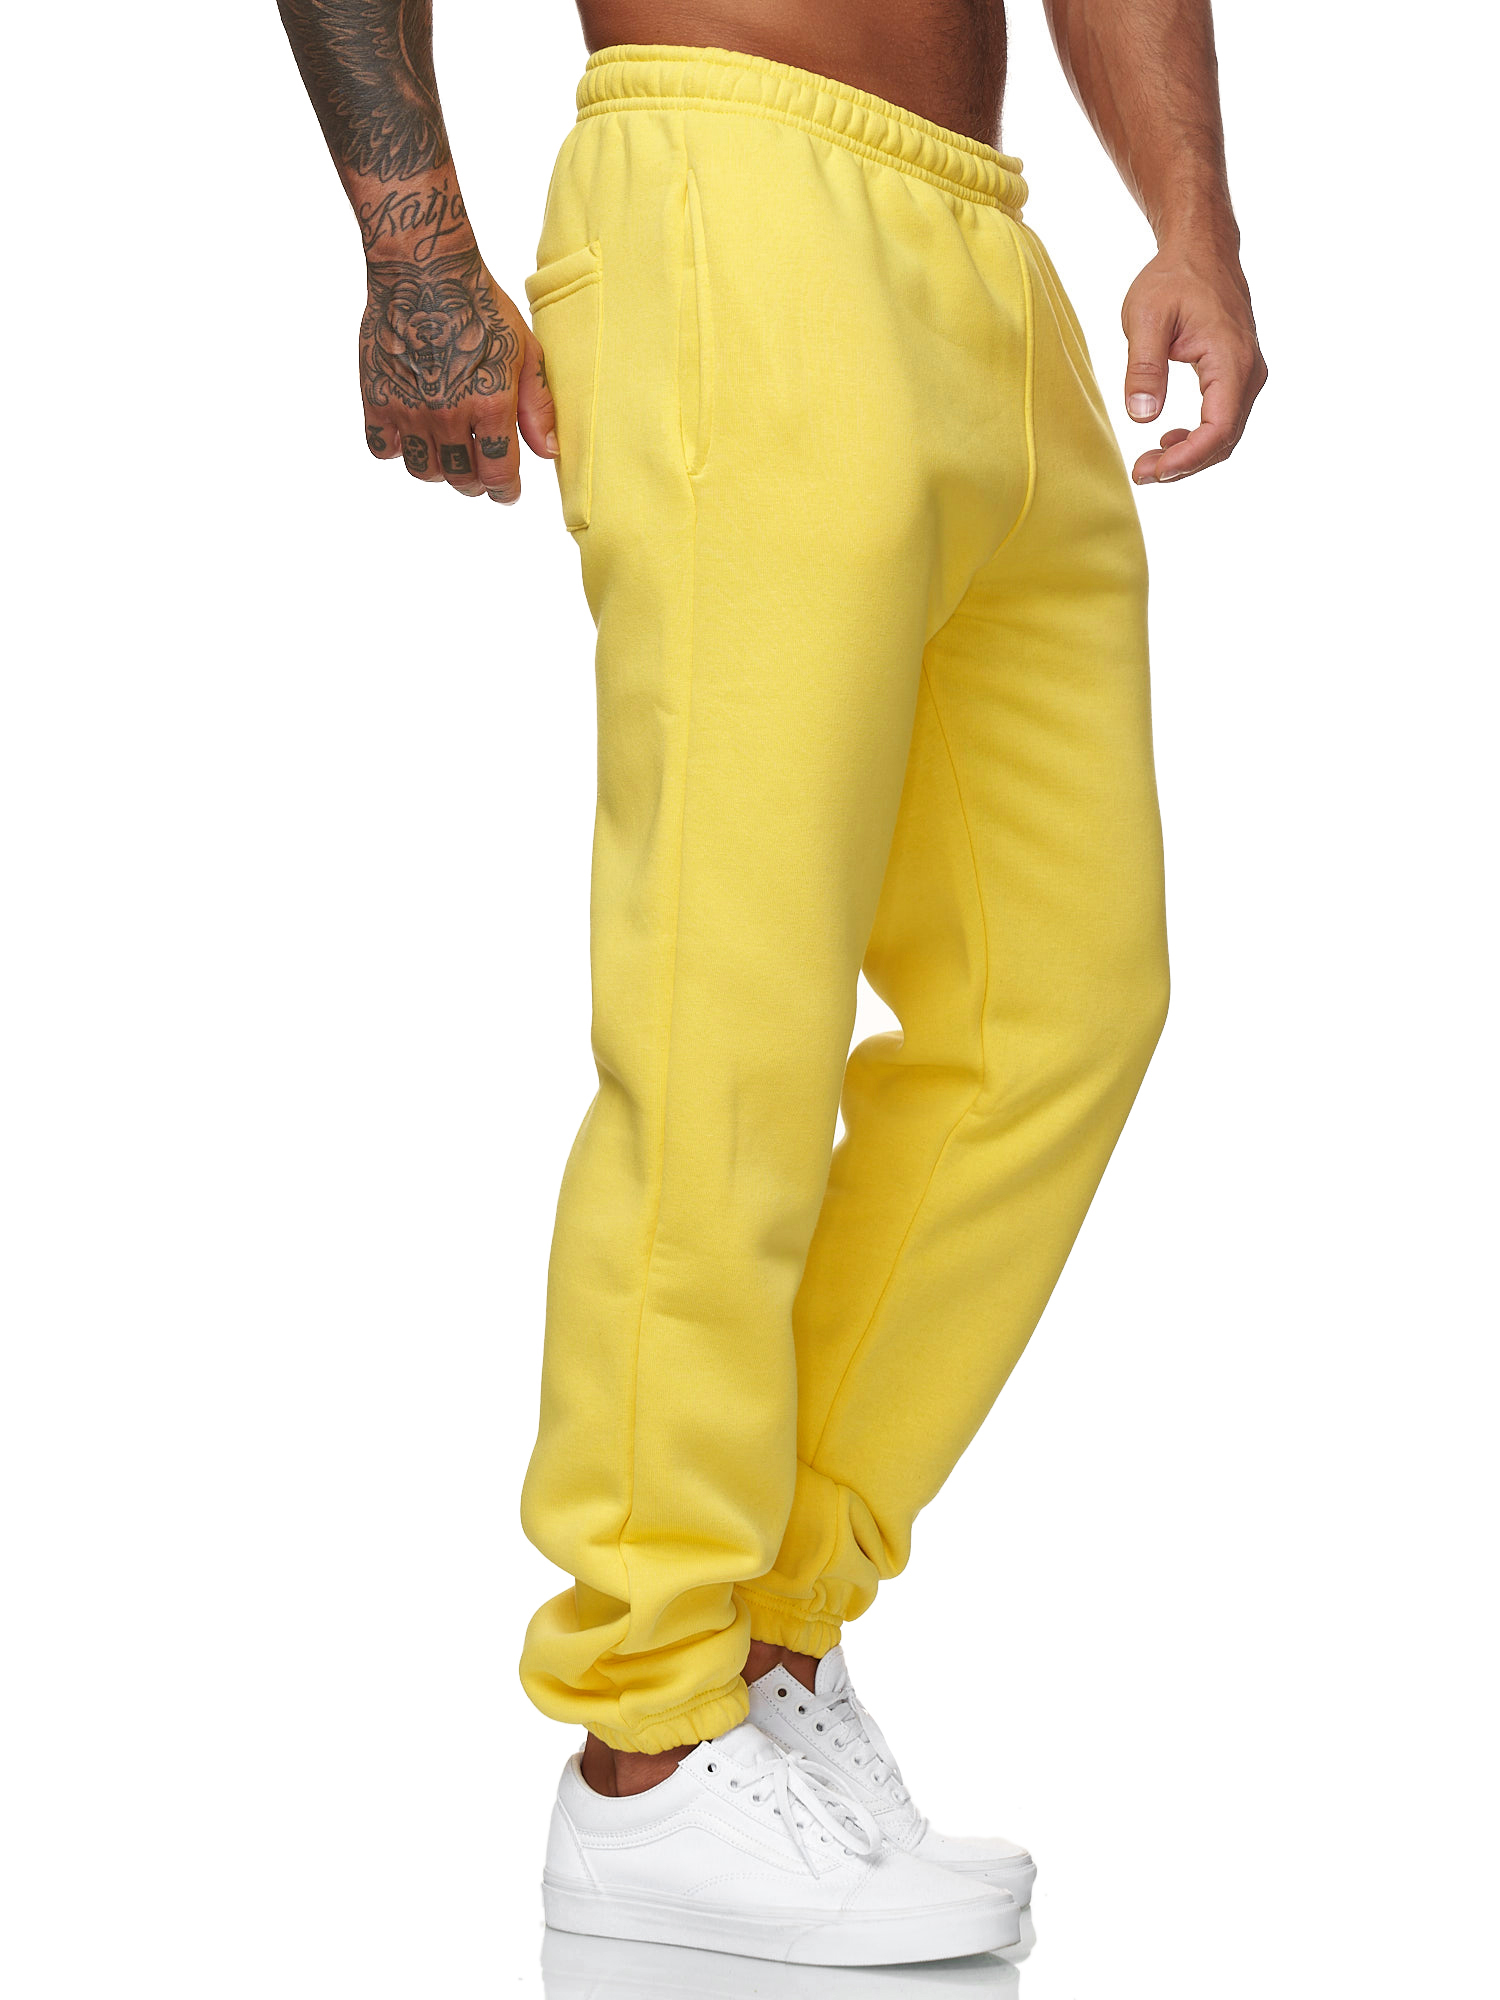 Koburas Herren Jogginghose Streetwear Design Hip Hop Sporthose für Männer Trainingshose Laufhose Gym Freizeithose Baggy Sweatpants Chill Modell KO-13115 